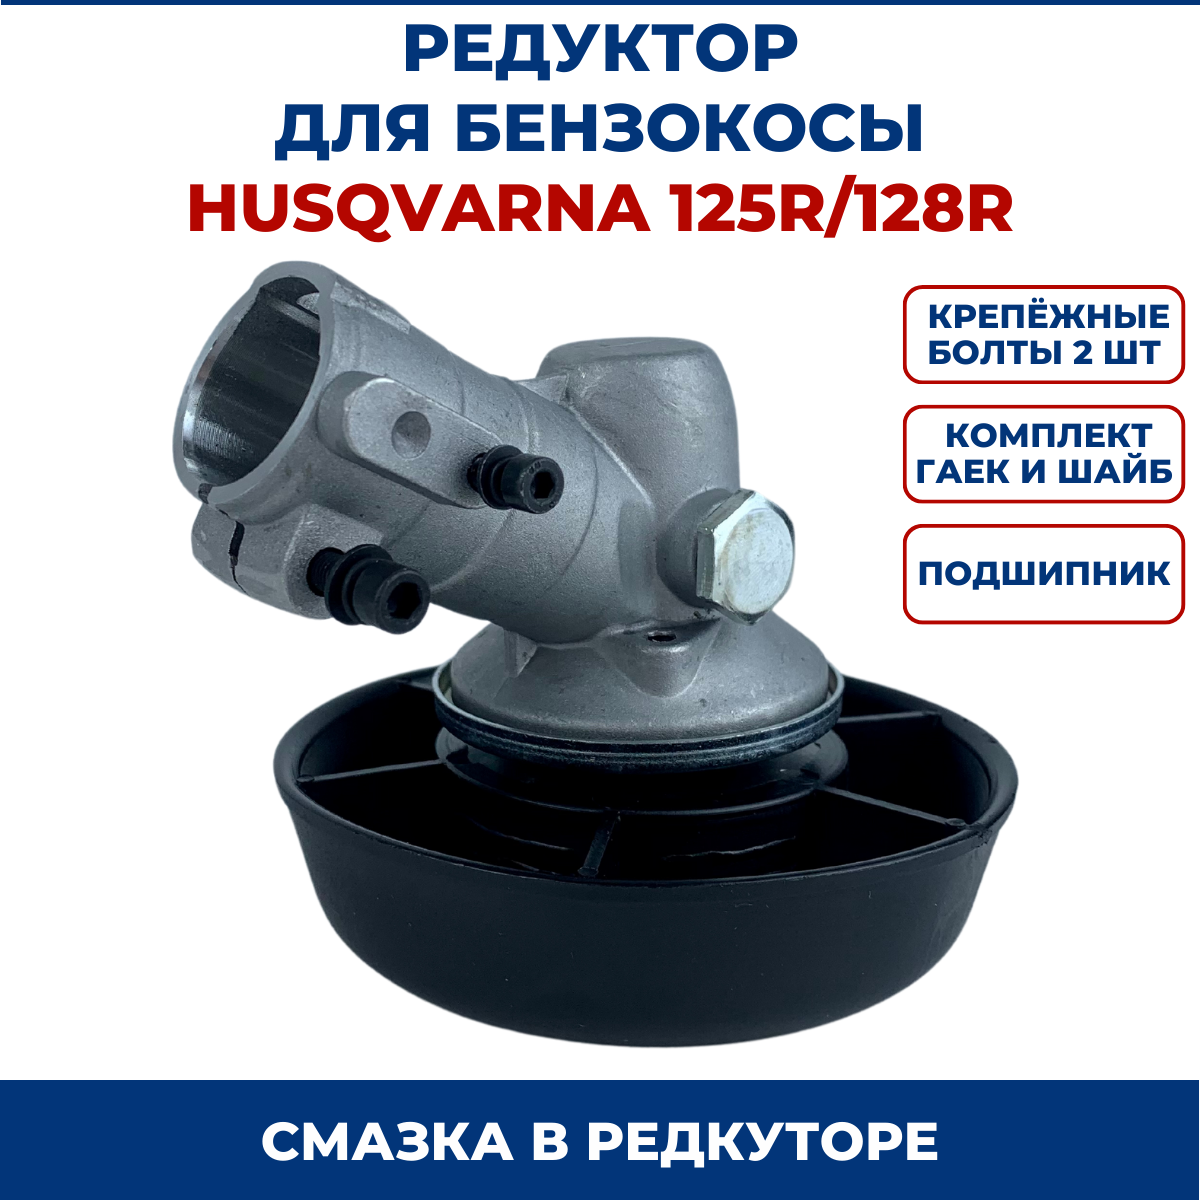 Редуктор для бензокосы Husqvarna 125R/128R